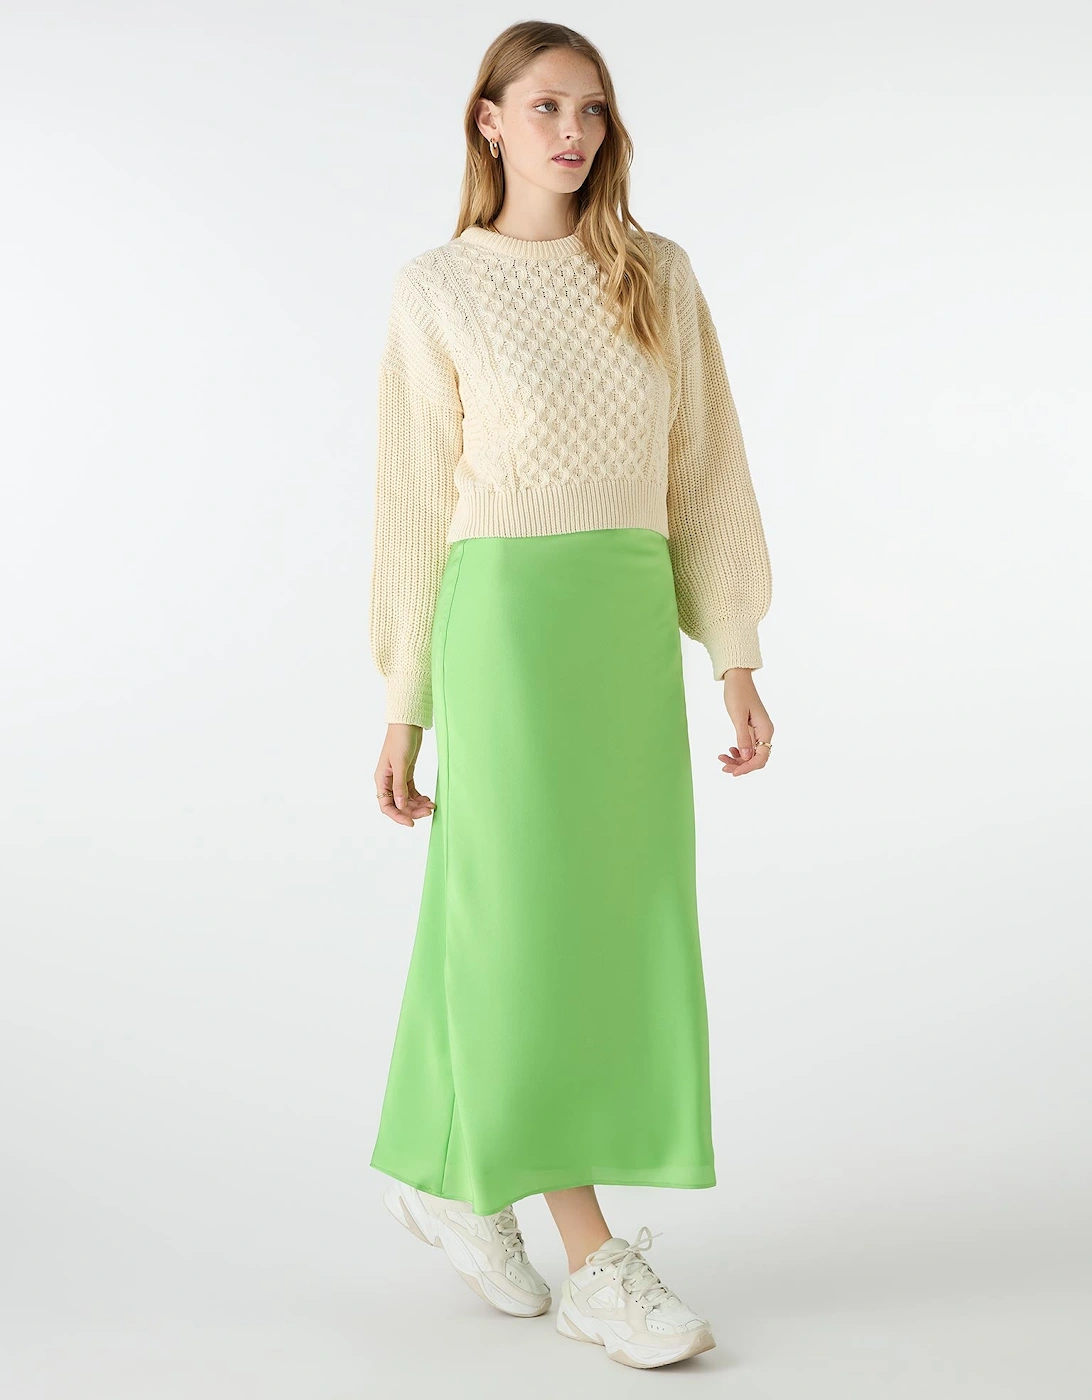 Omnes Women's Stella Skirt in Green - Size: 20